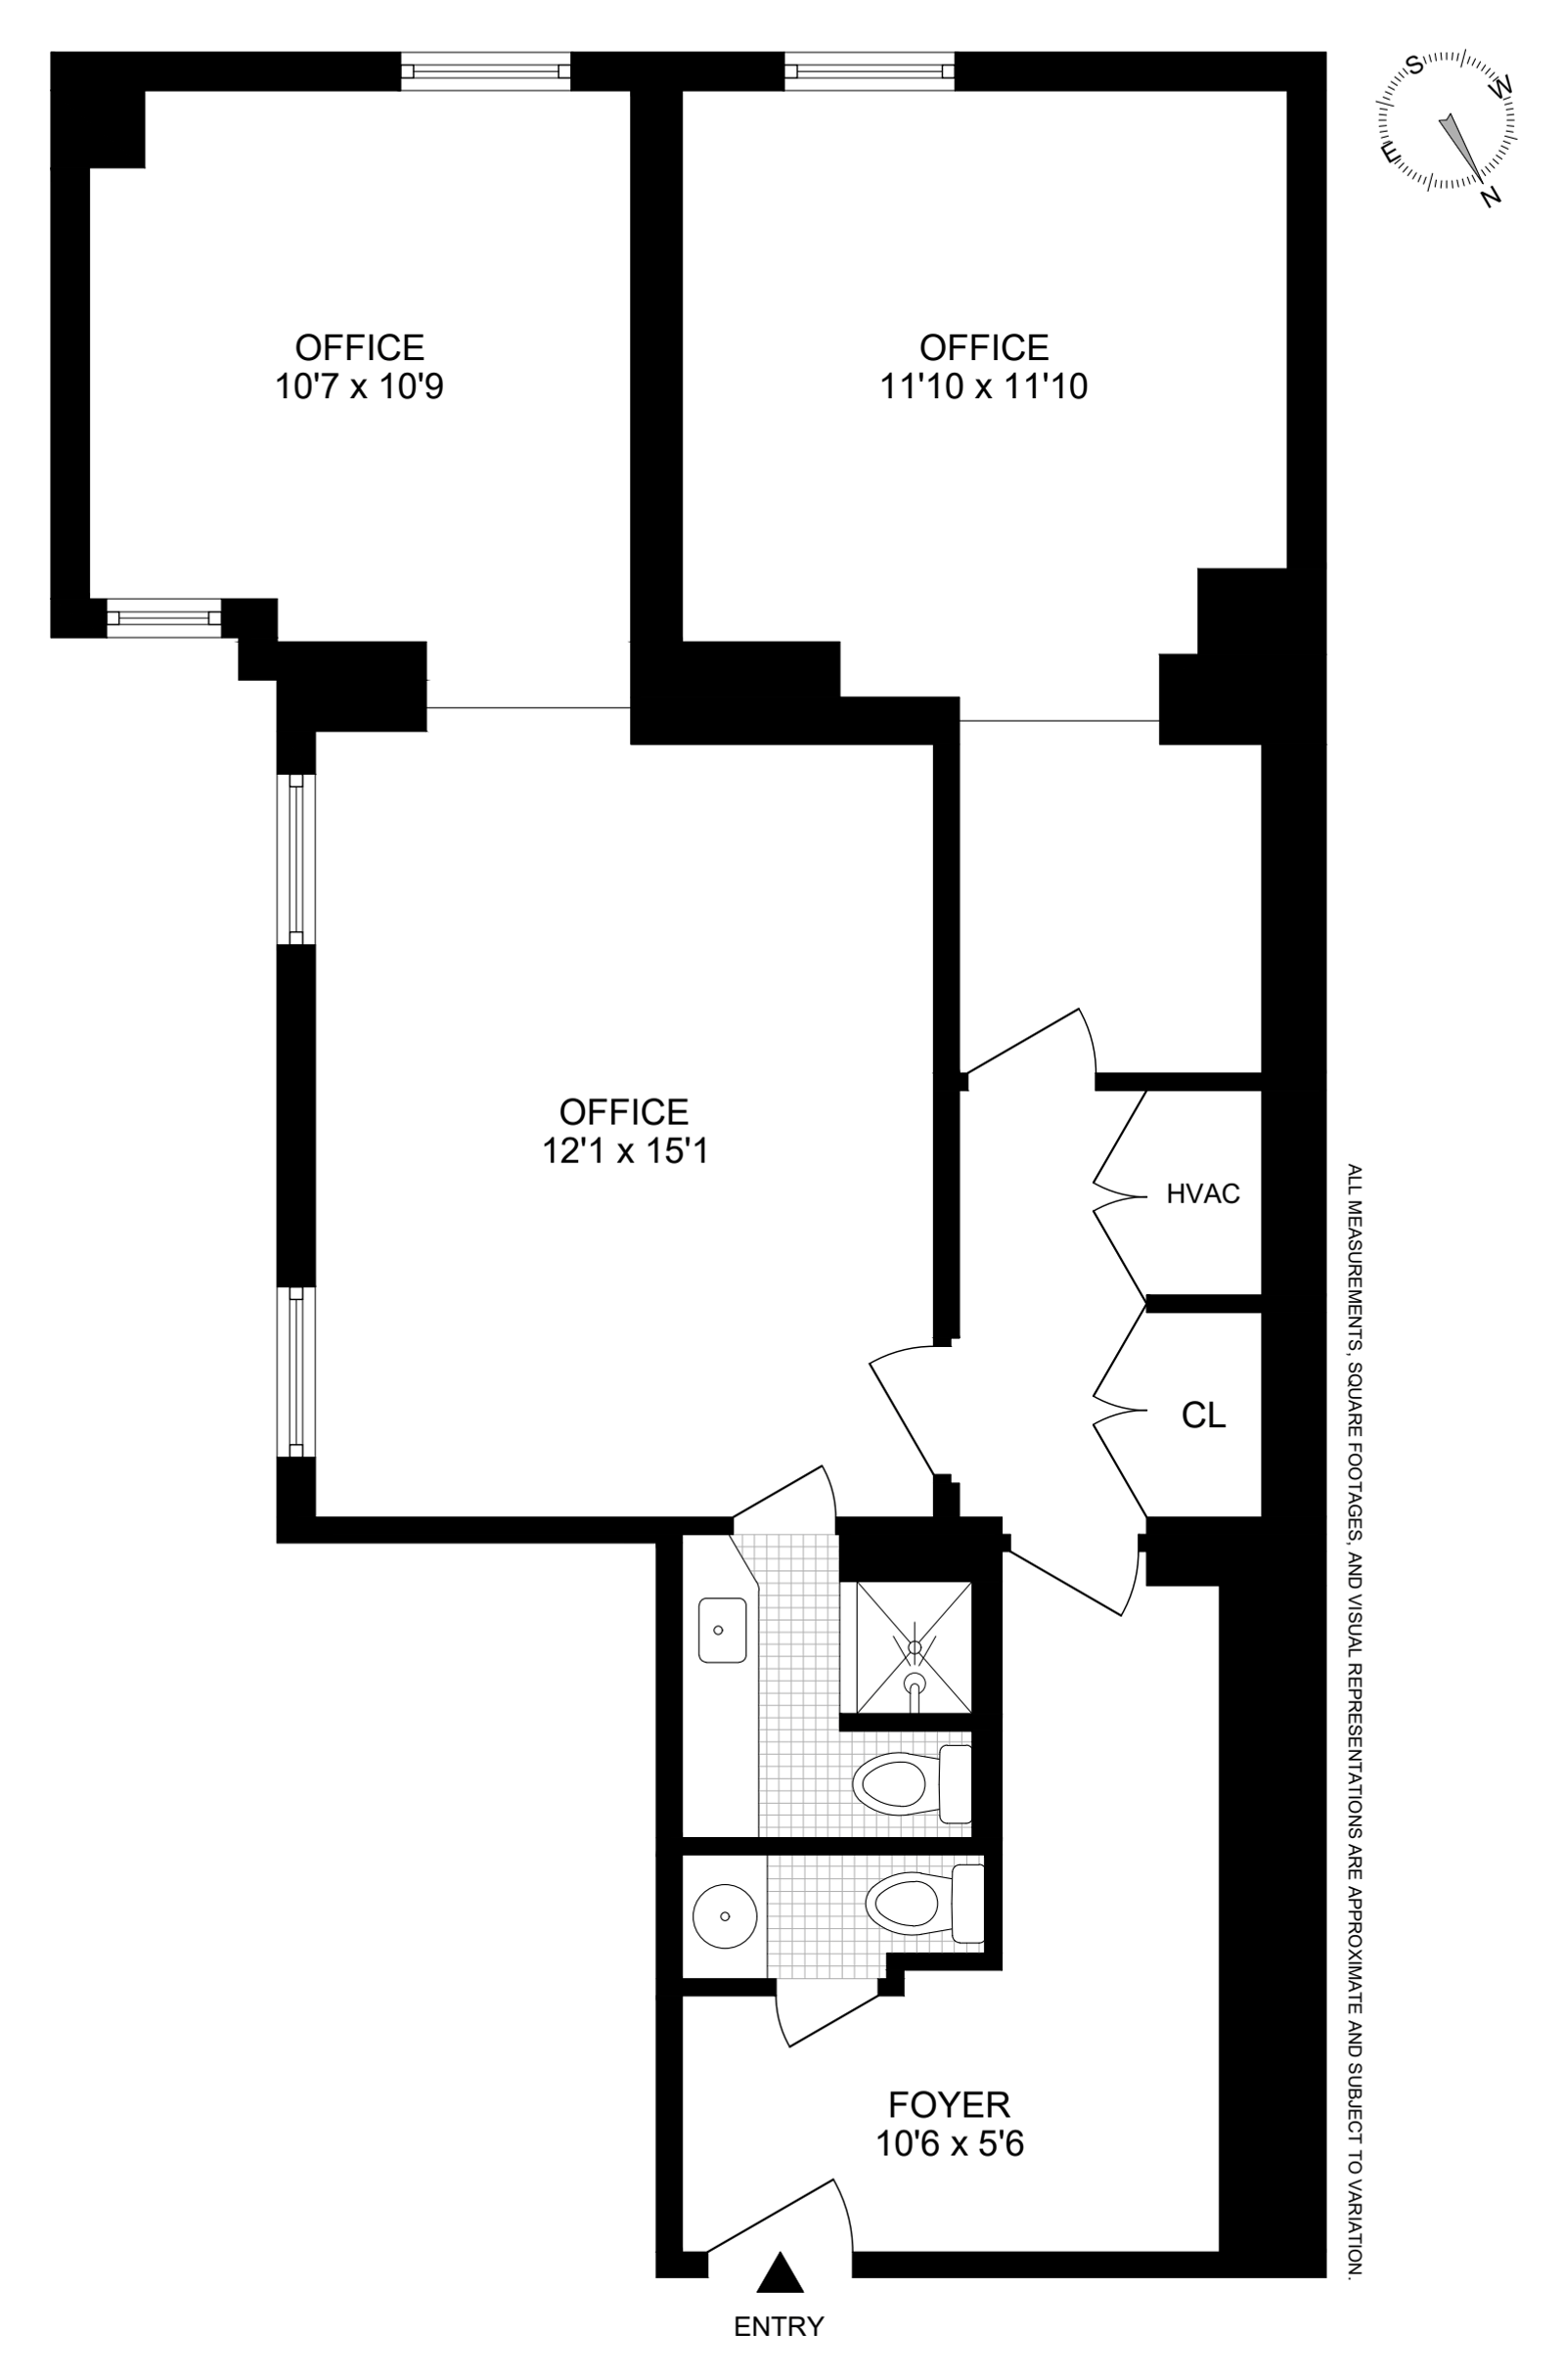 Floorplan for 8 West 65th Street, 1B